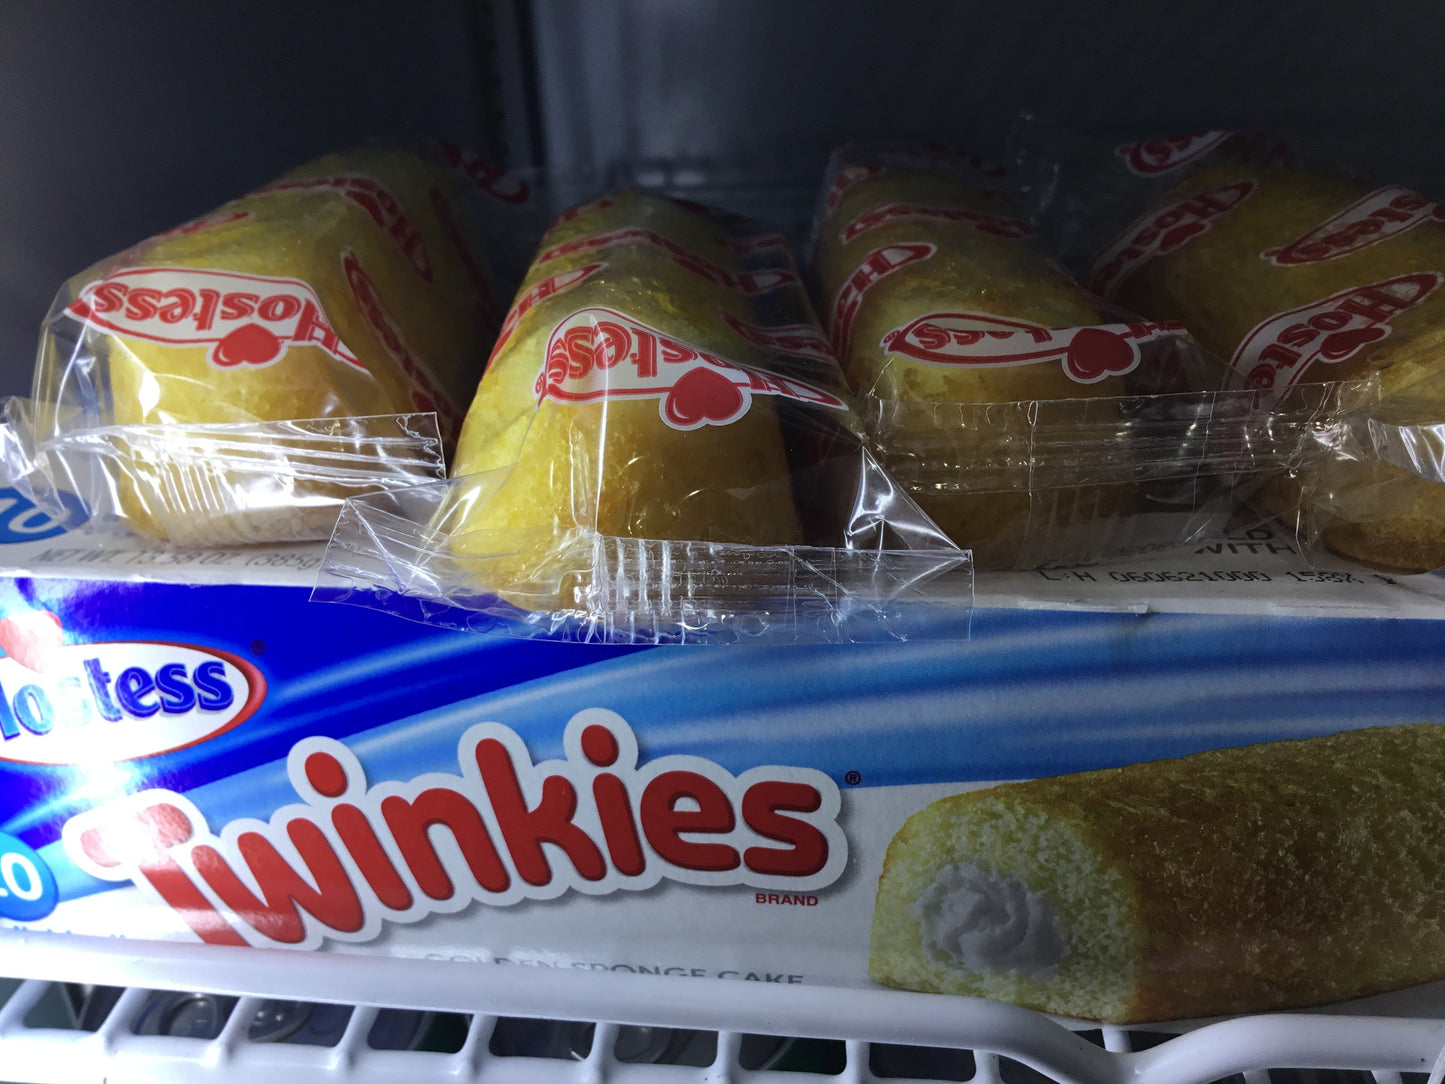 Hostess Twinkies 38g USA